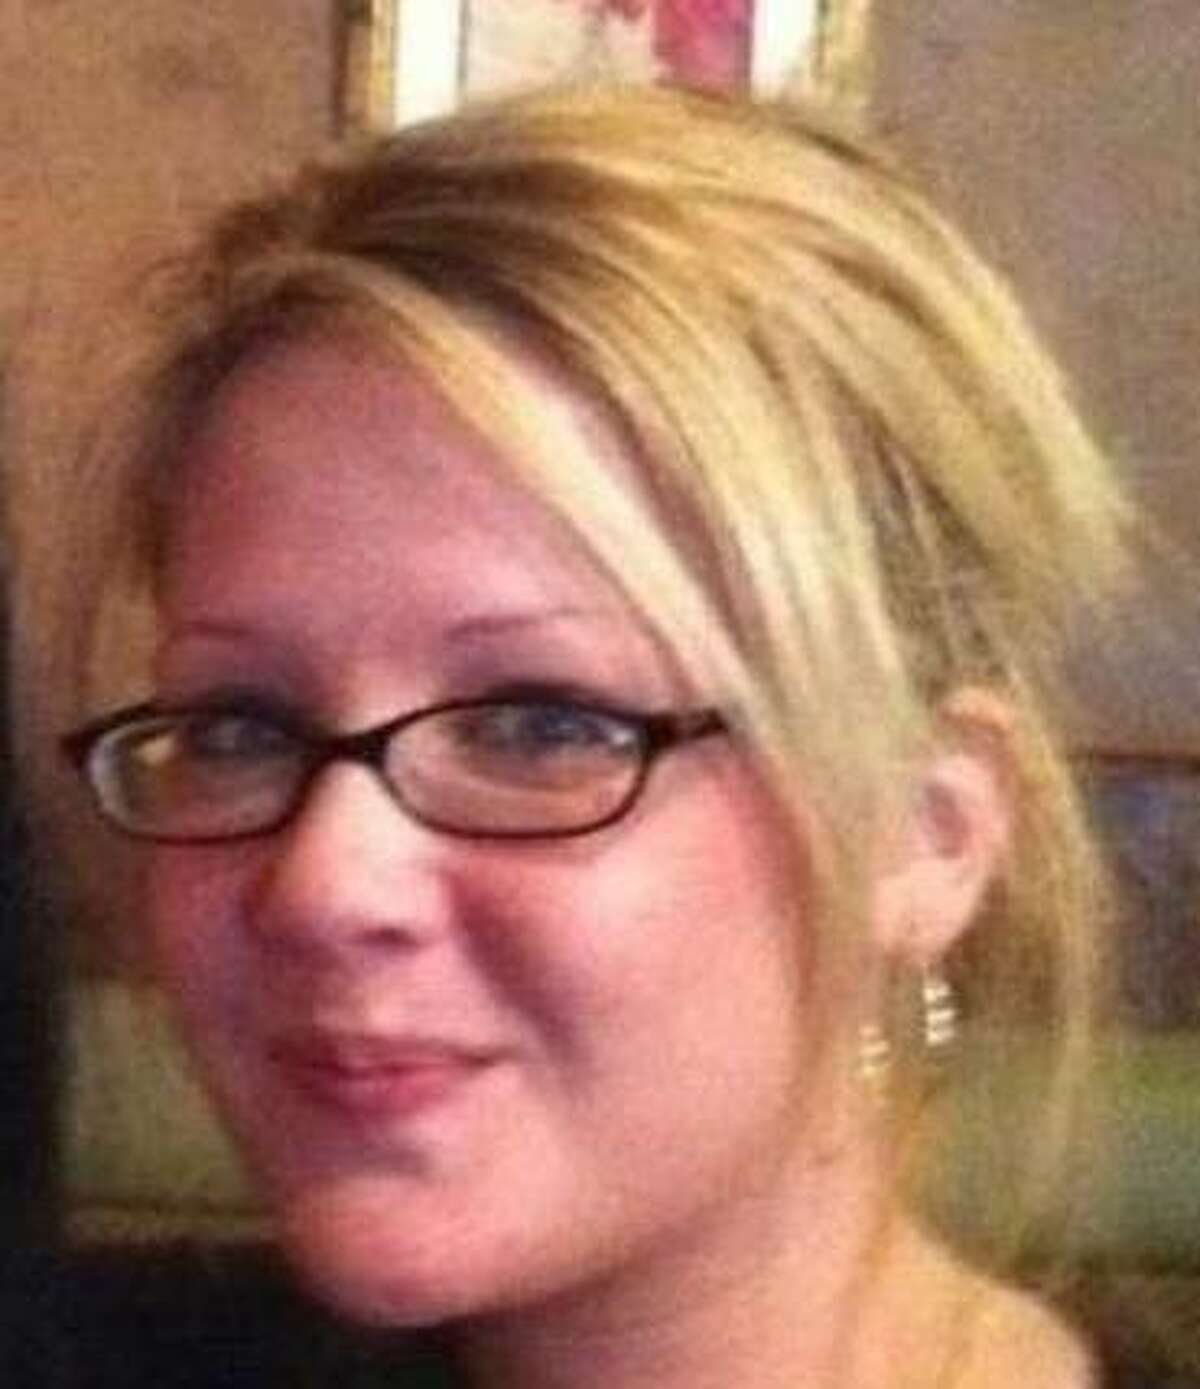 Amanda King, missing, was last seen in October 2013.